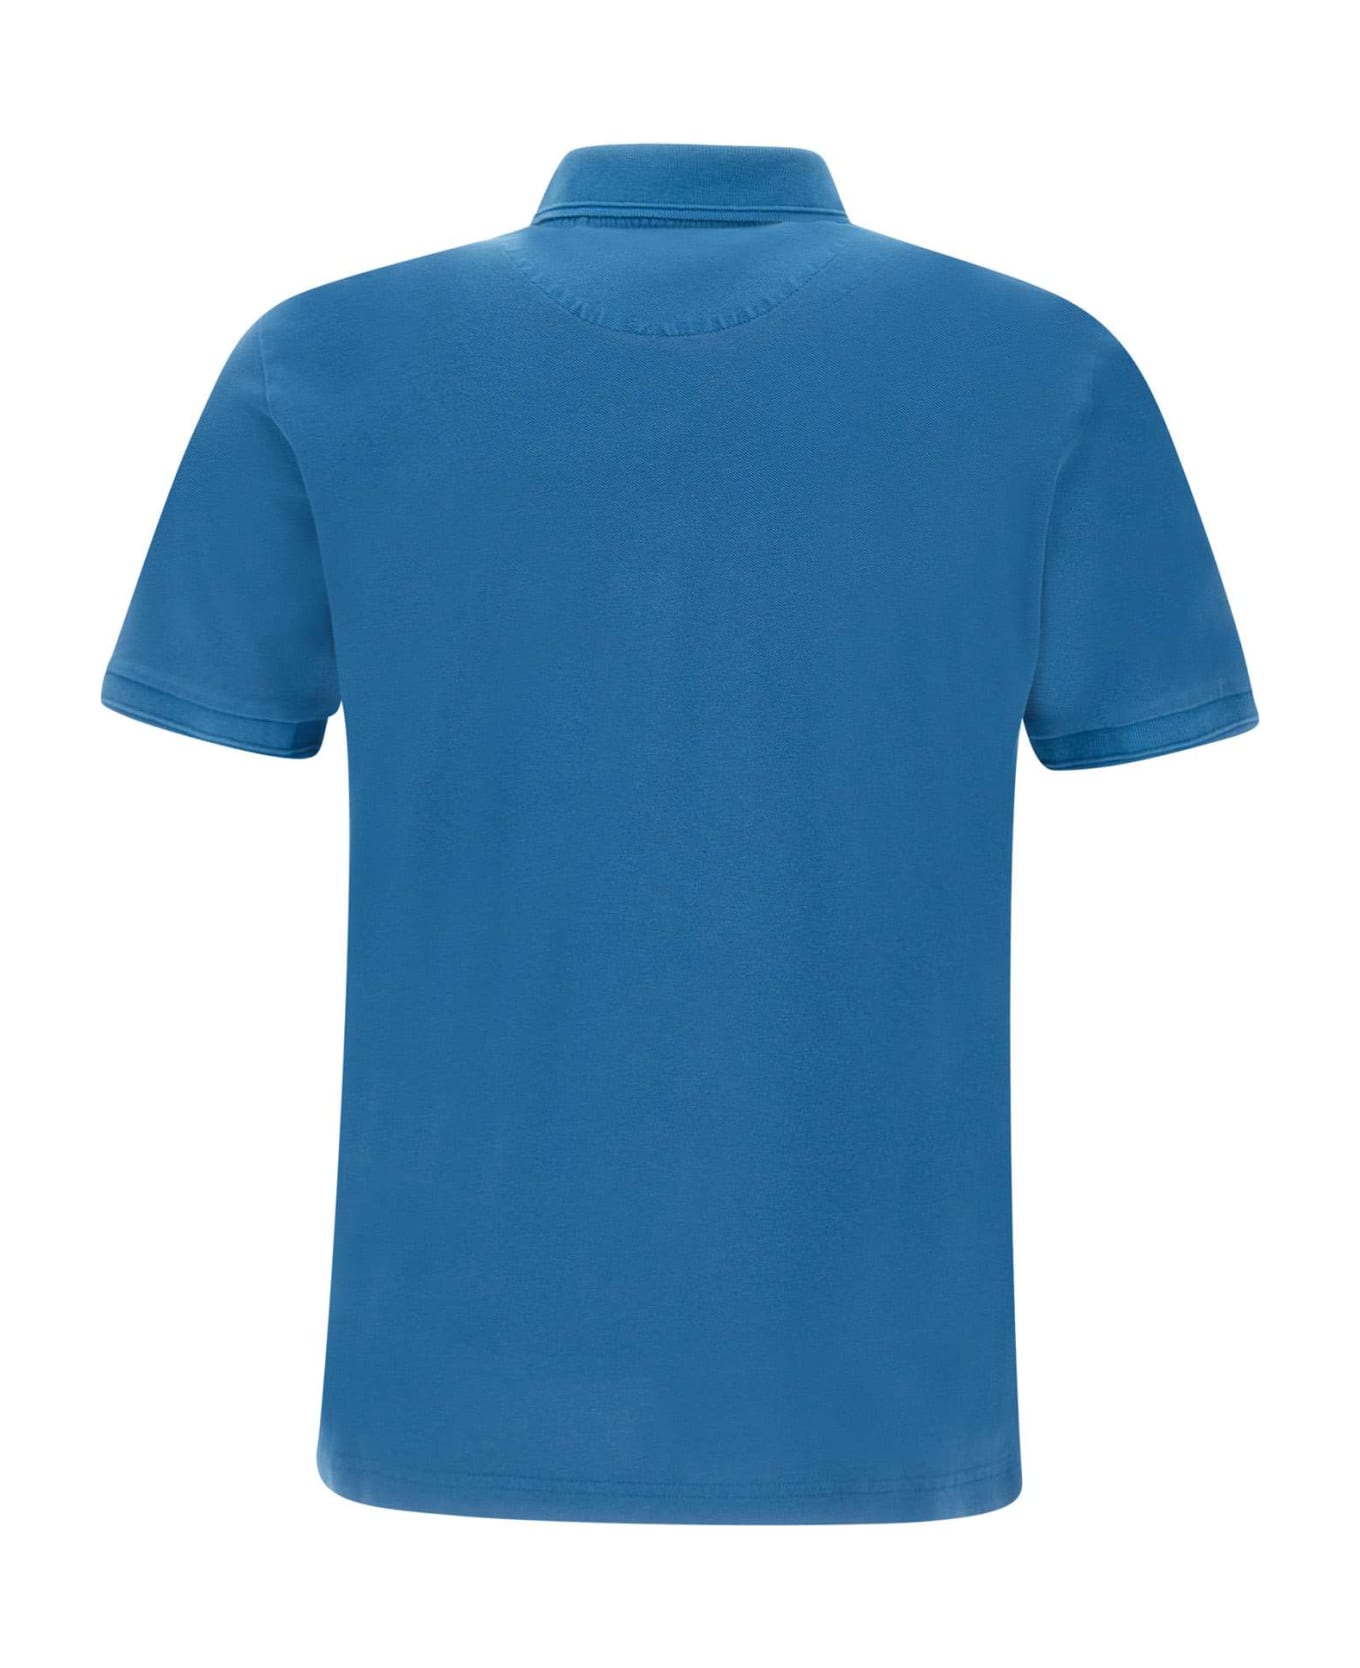 Woolrich 'mackinack' Cotton Piquet Polo Shirt - BLUE ポロシャツ